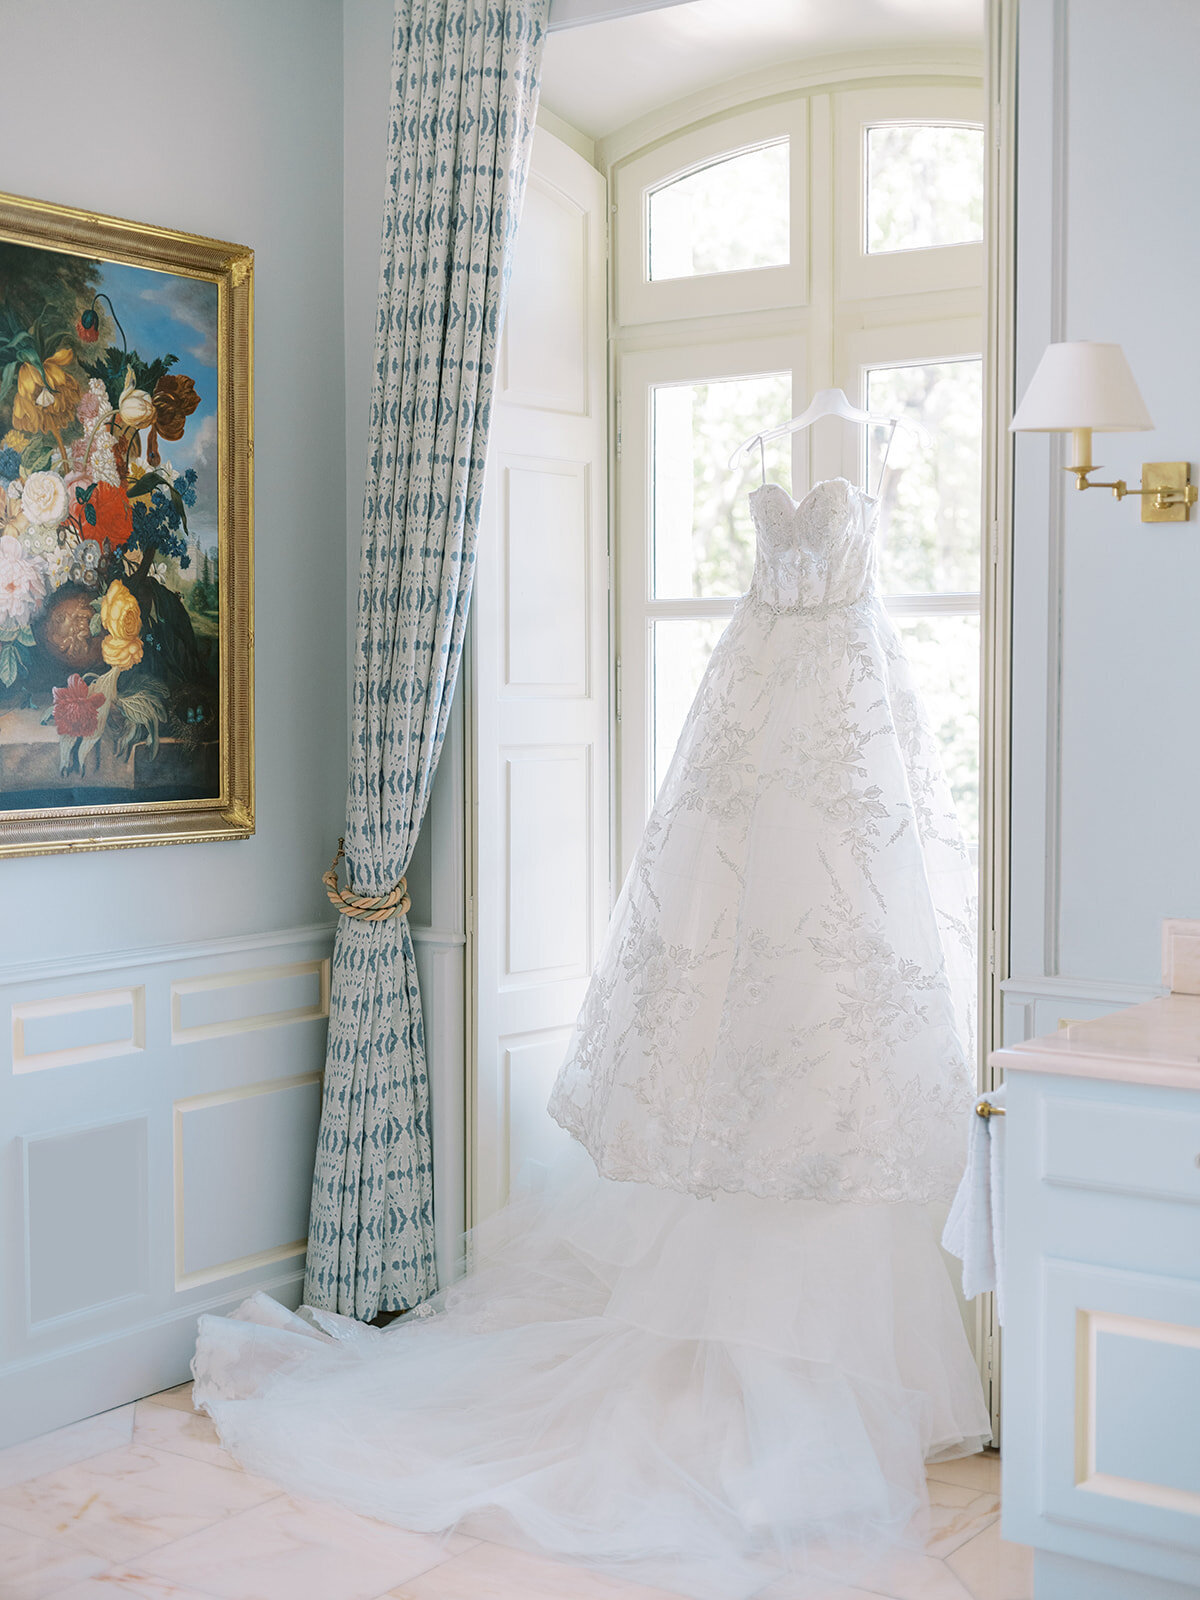 Chateau-de-Tourreau-France-wedding-by-Julia-Kaptelova_Photography-0020